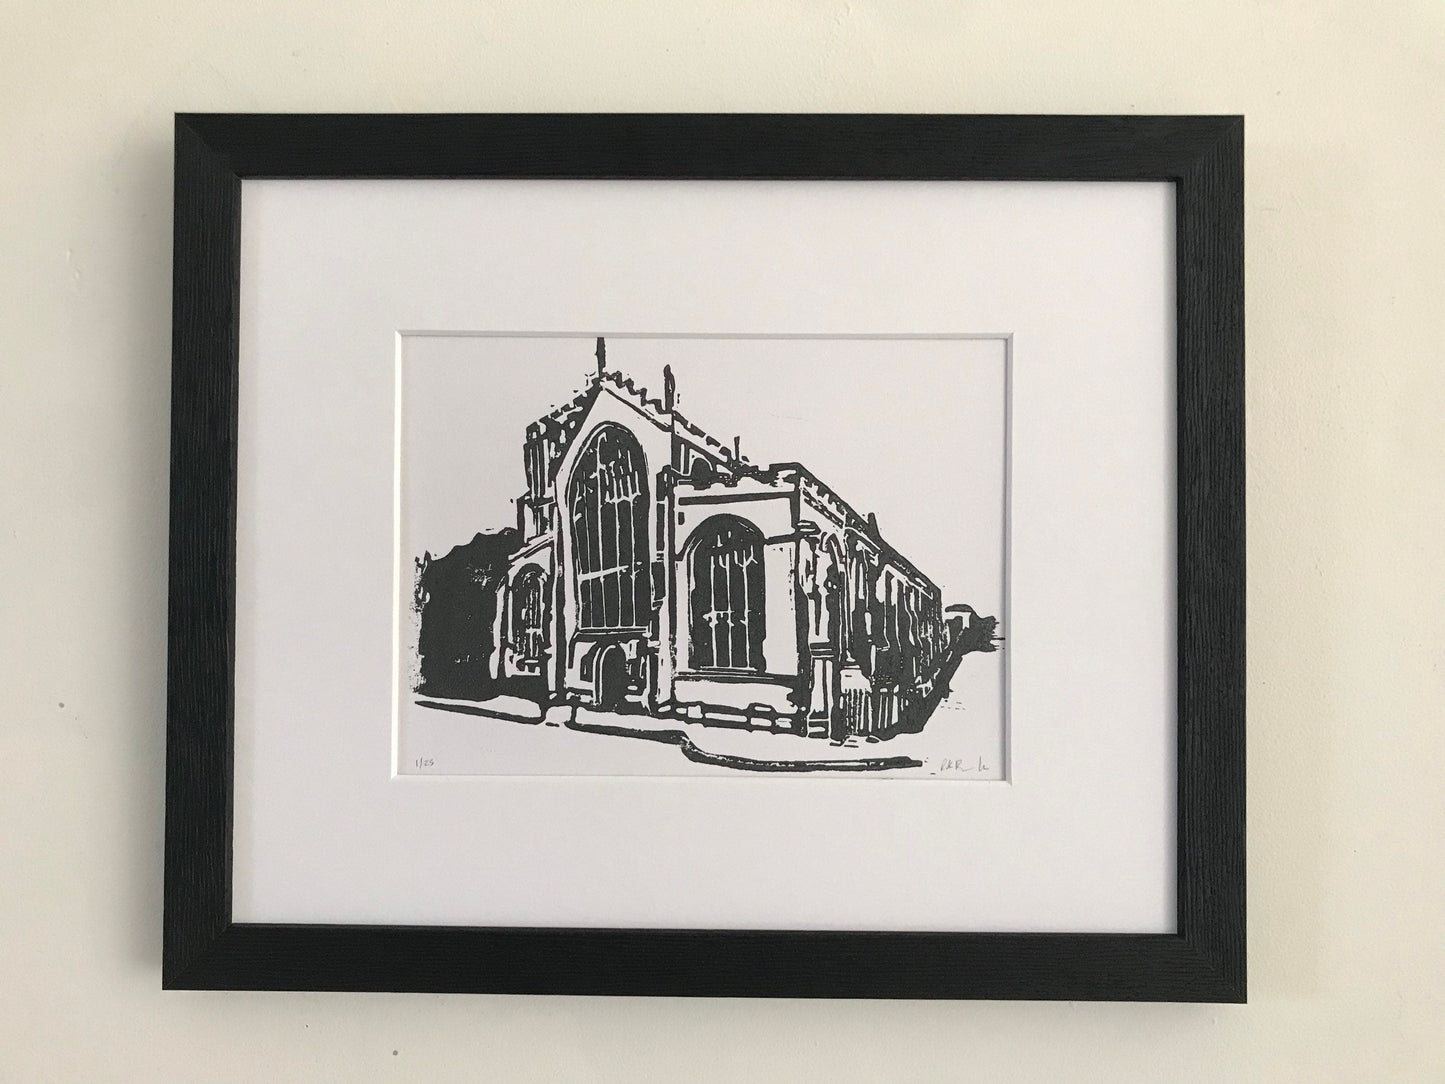 St Mary’s Church, Bury St Edmunds. Original Linocut Print by The Rik Barwick Studio